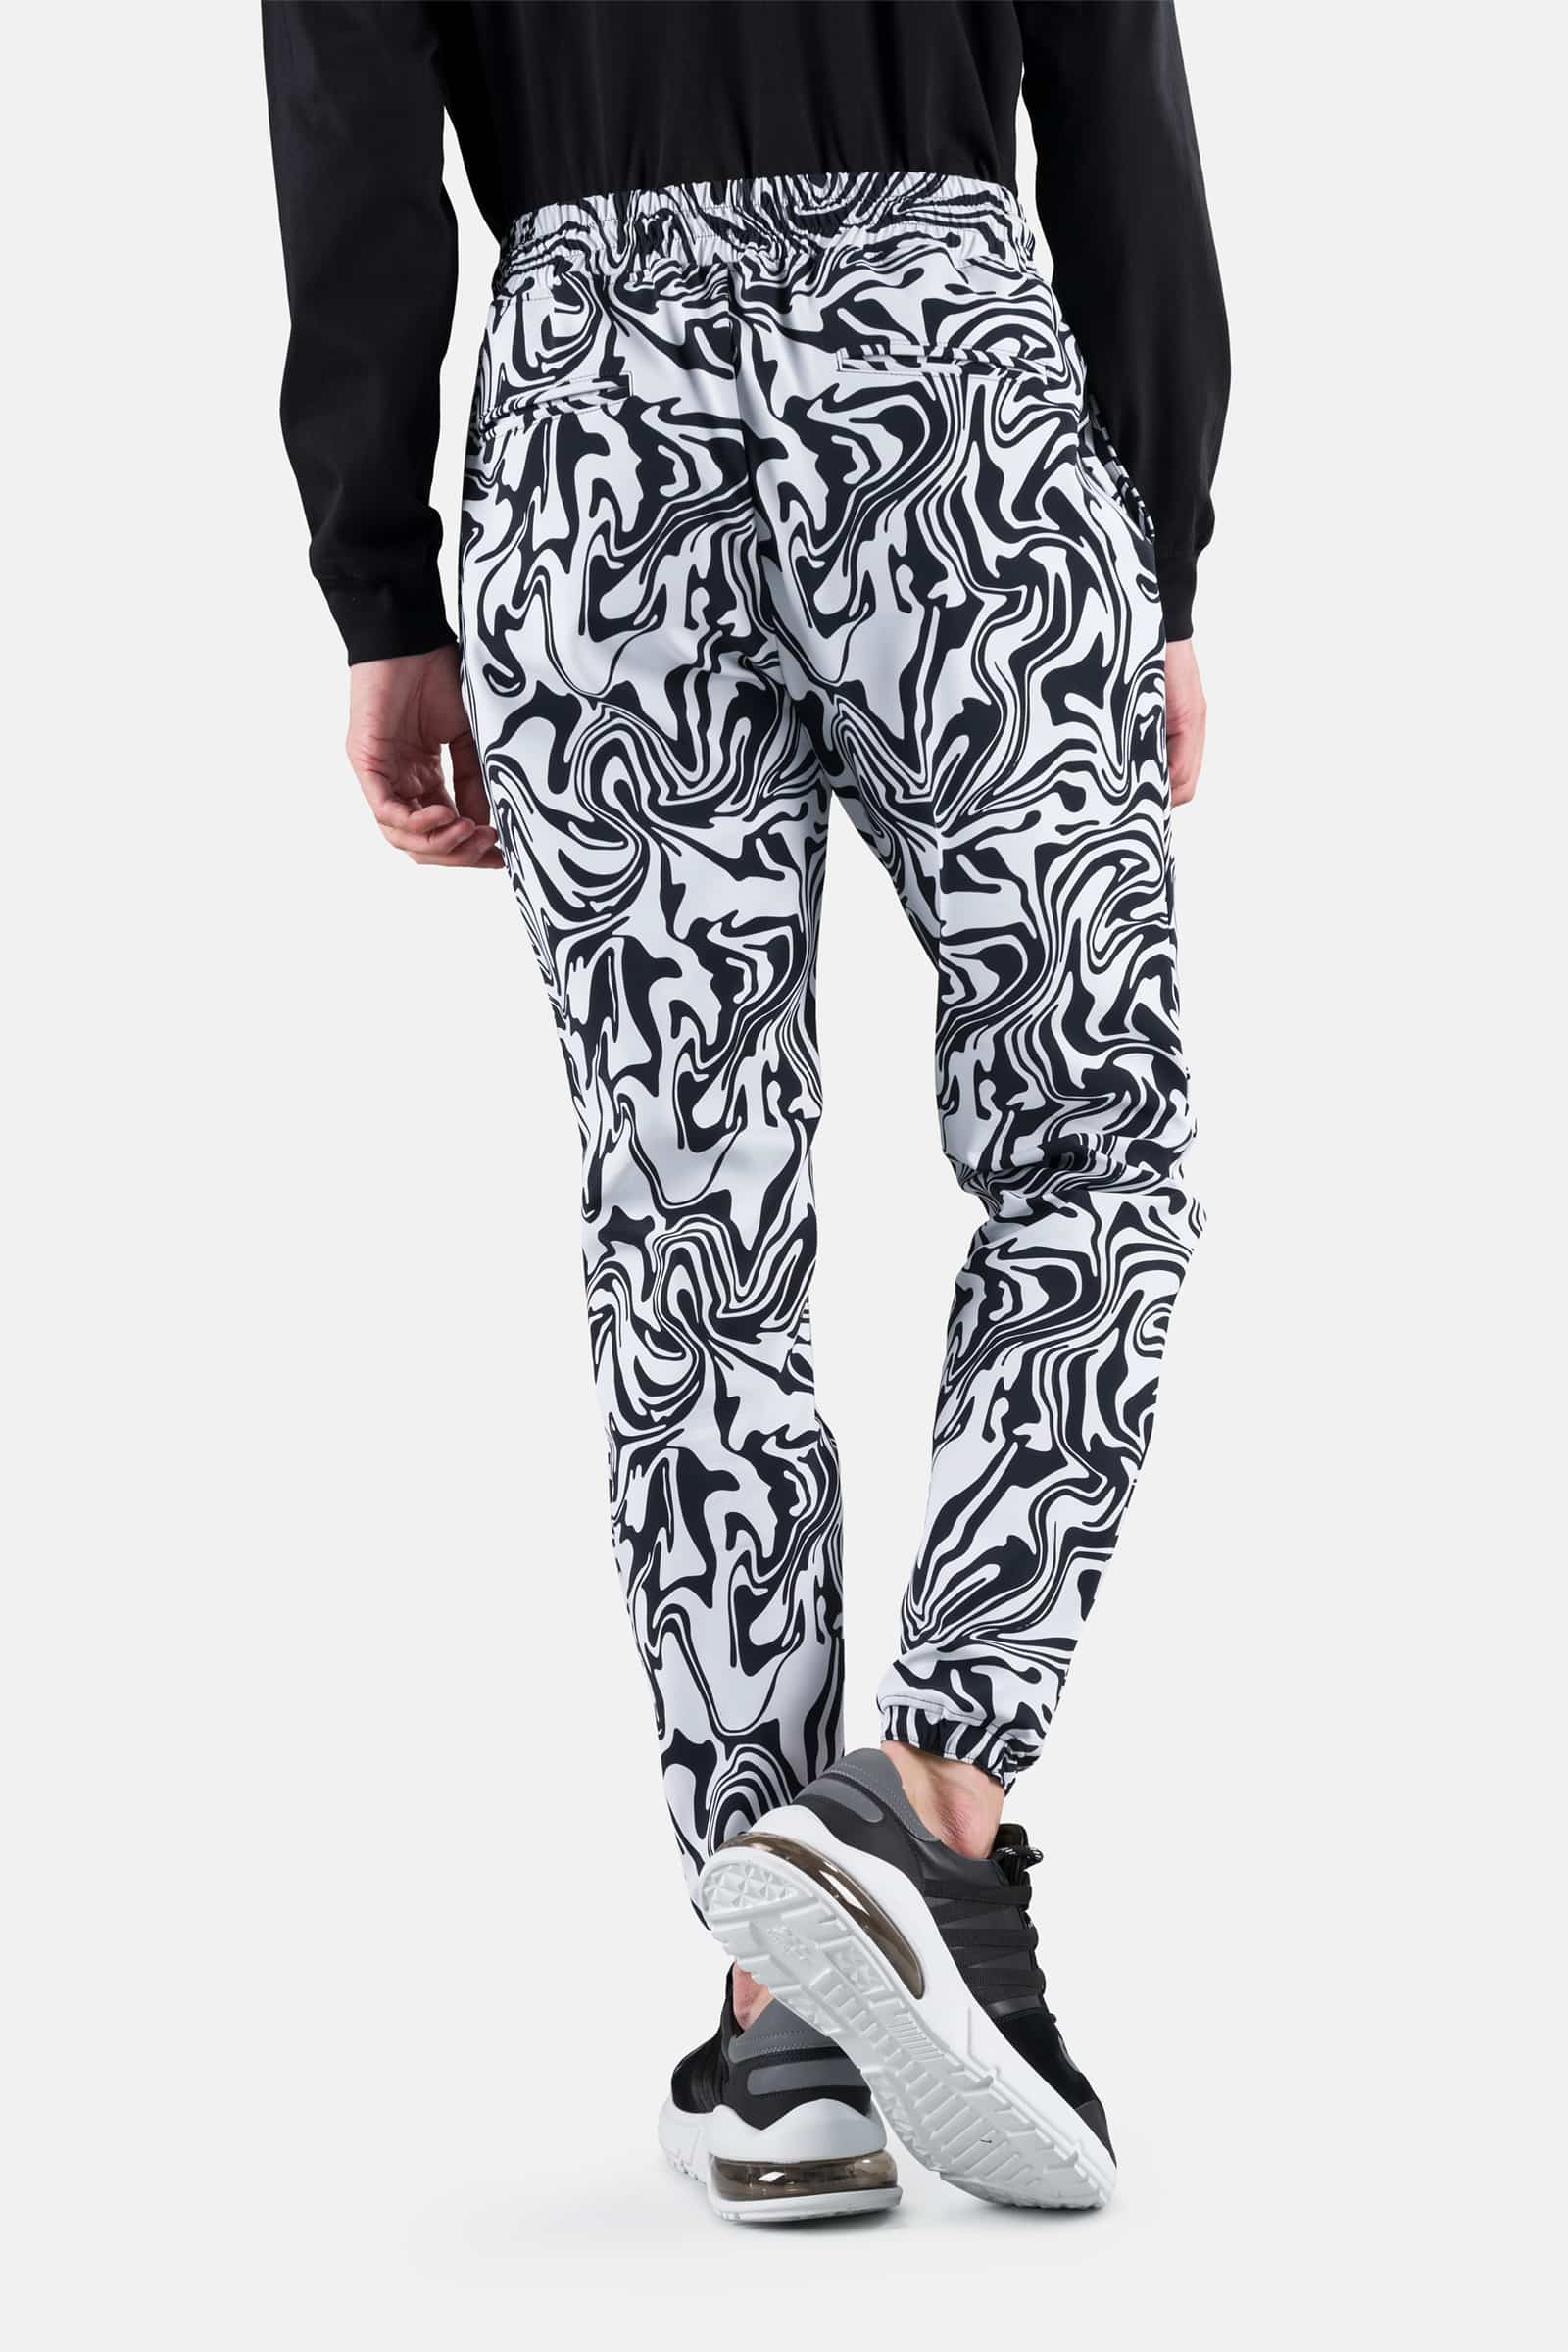 TRACKSUIT PANTS - WHITE CHROME - Hydrogen - Luxury Sportwear